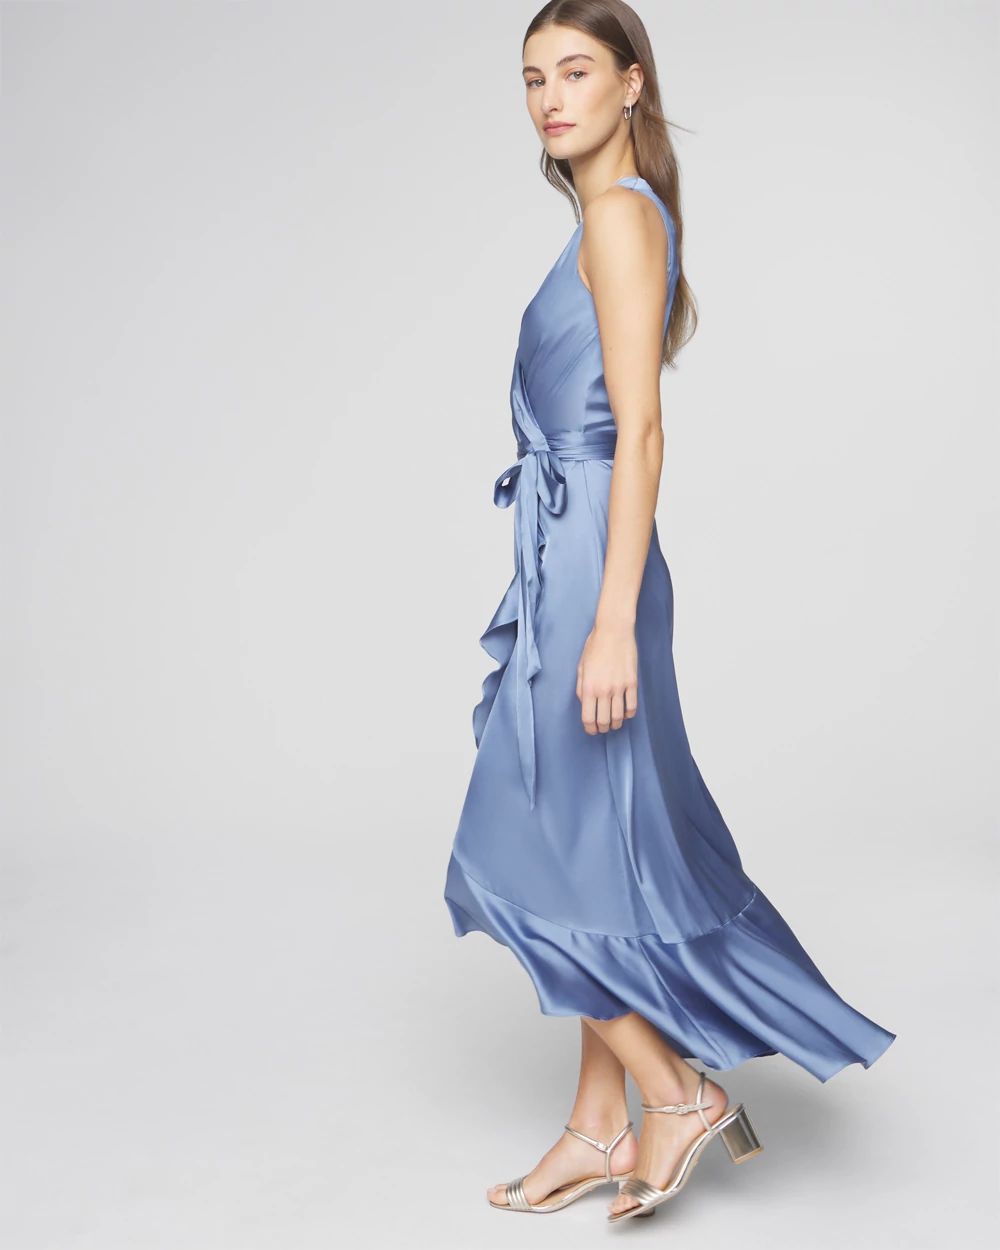 Sleeveless Satin Wrap Dress click to view larger image.